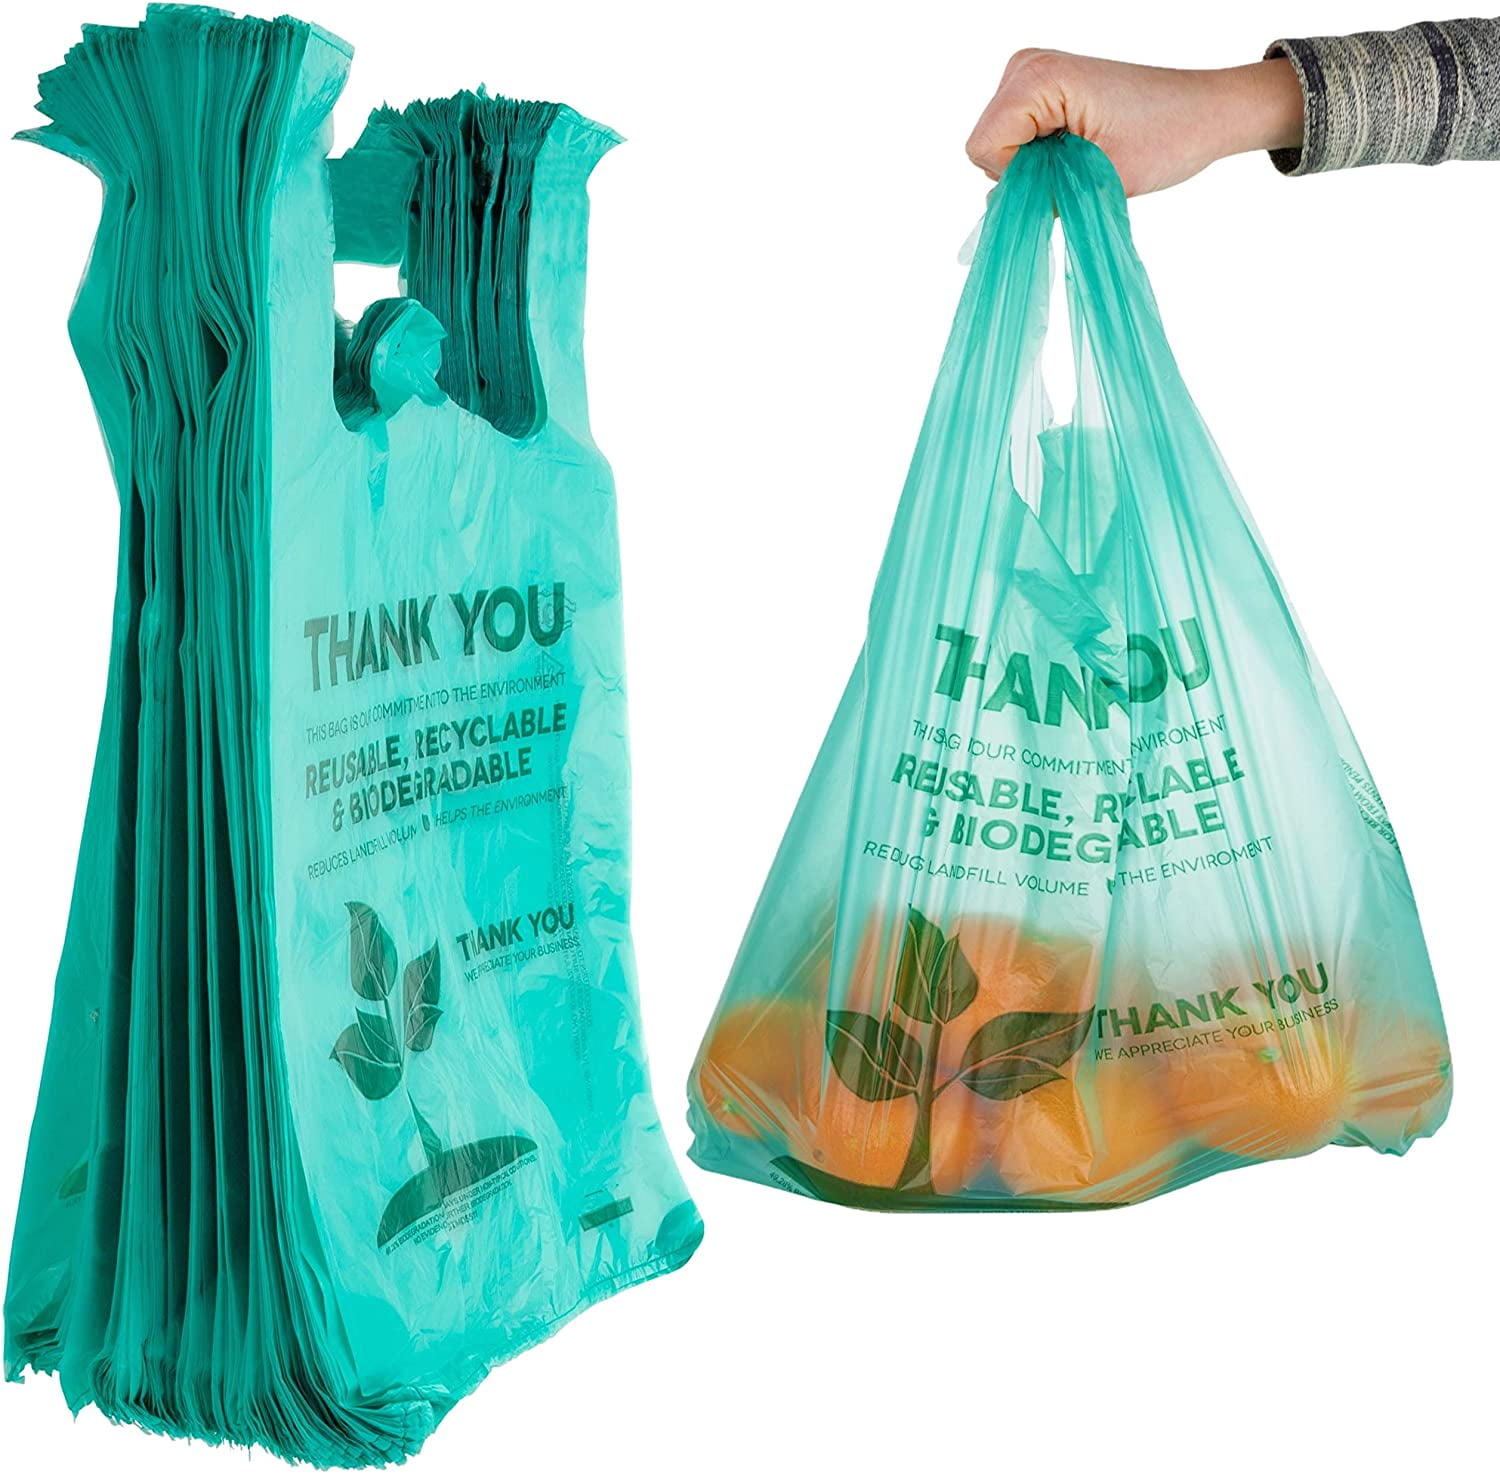 Home Compostable Pet Waste Bag (120) – Pawtopia